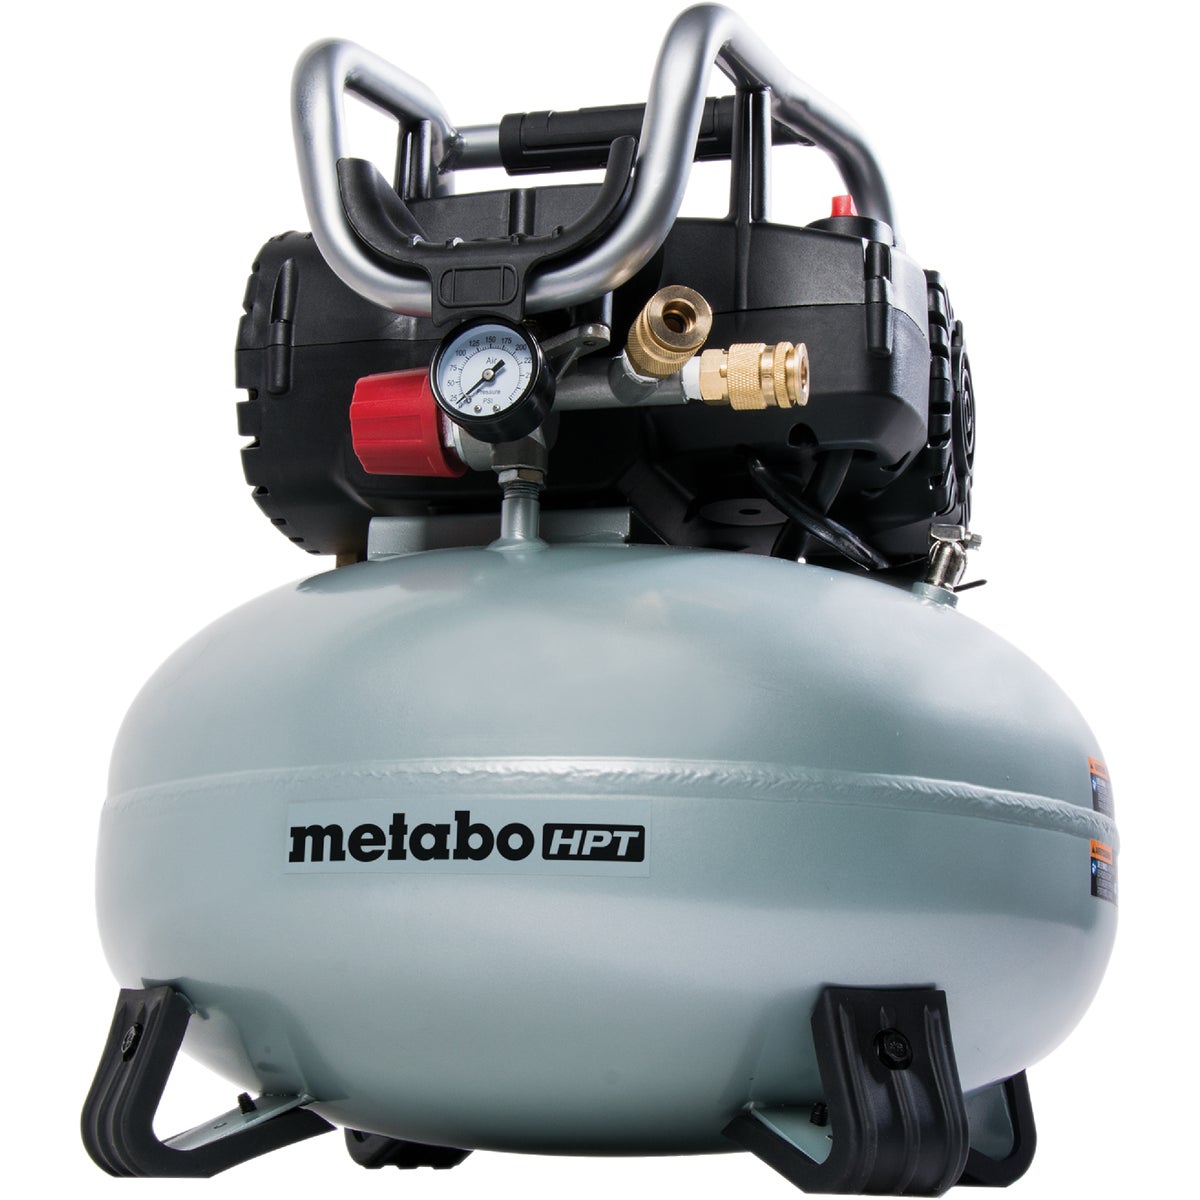 Metabo HPT 6 Gal. 150 psi Pancake Air Compressor